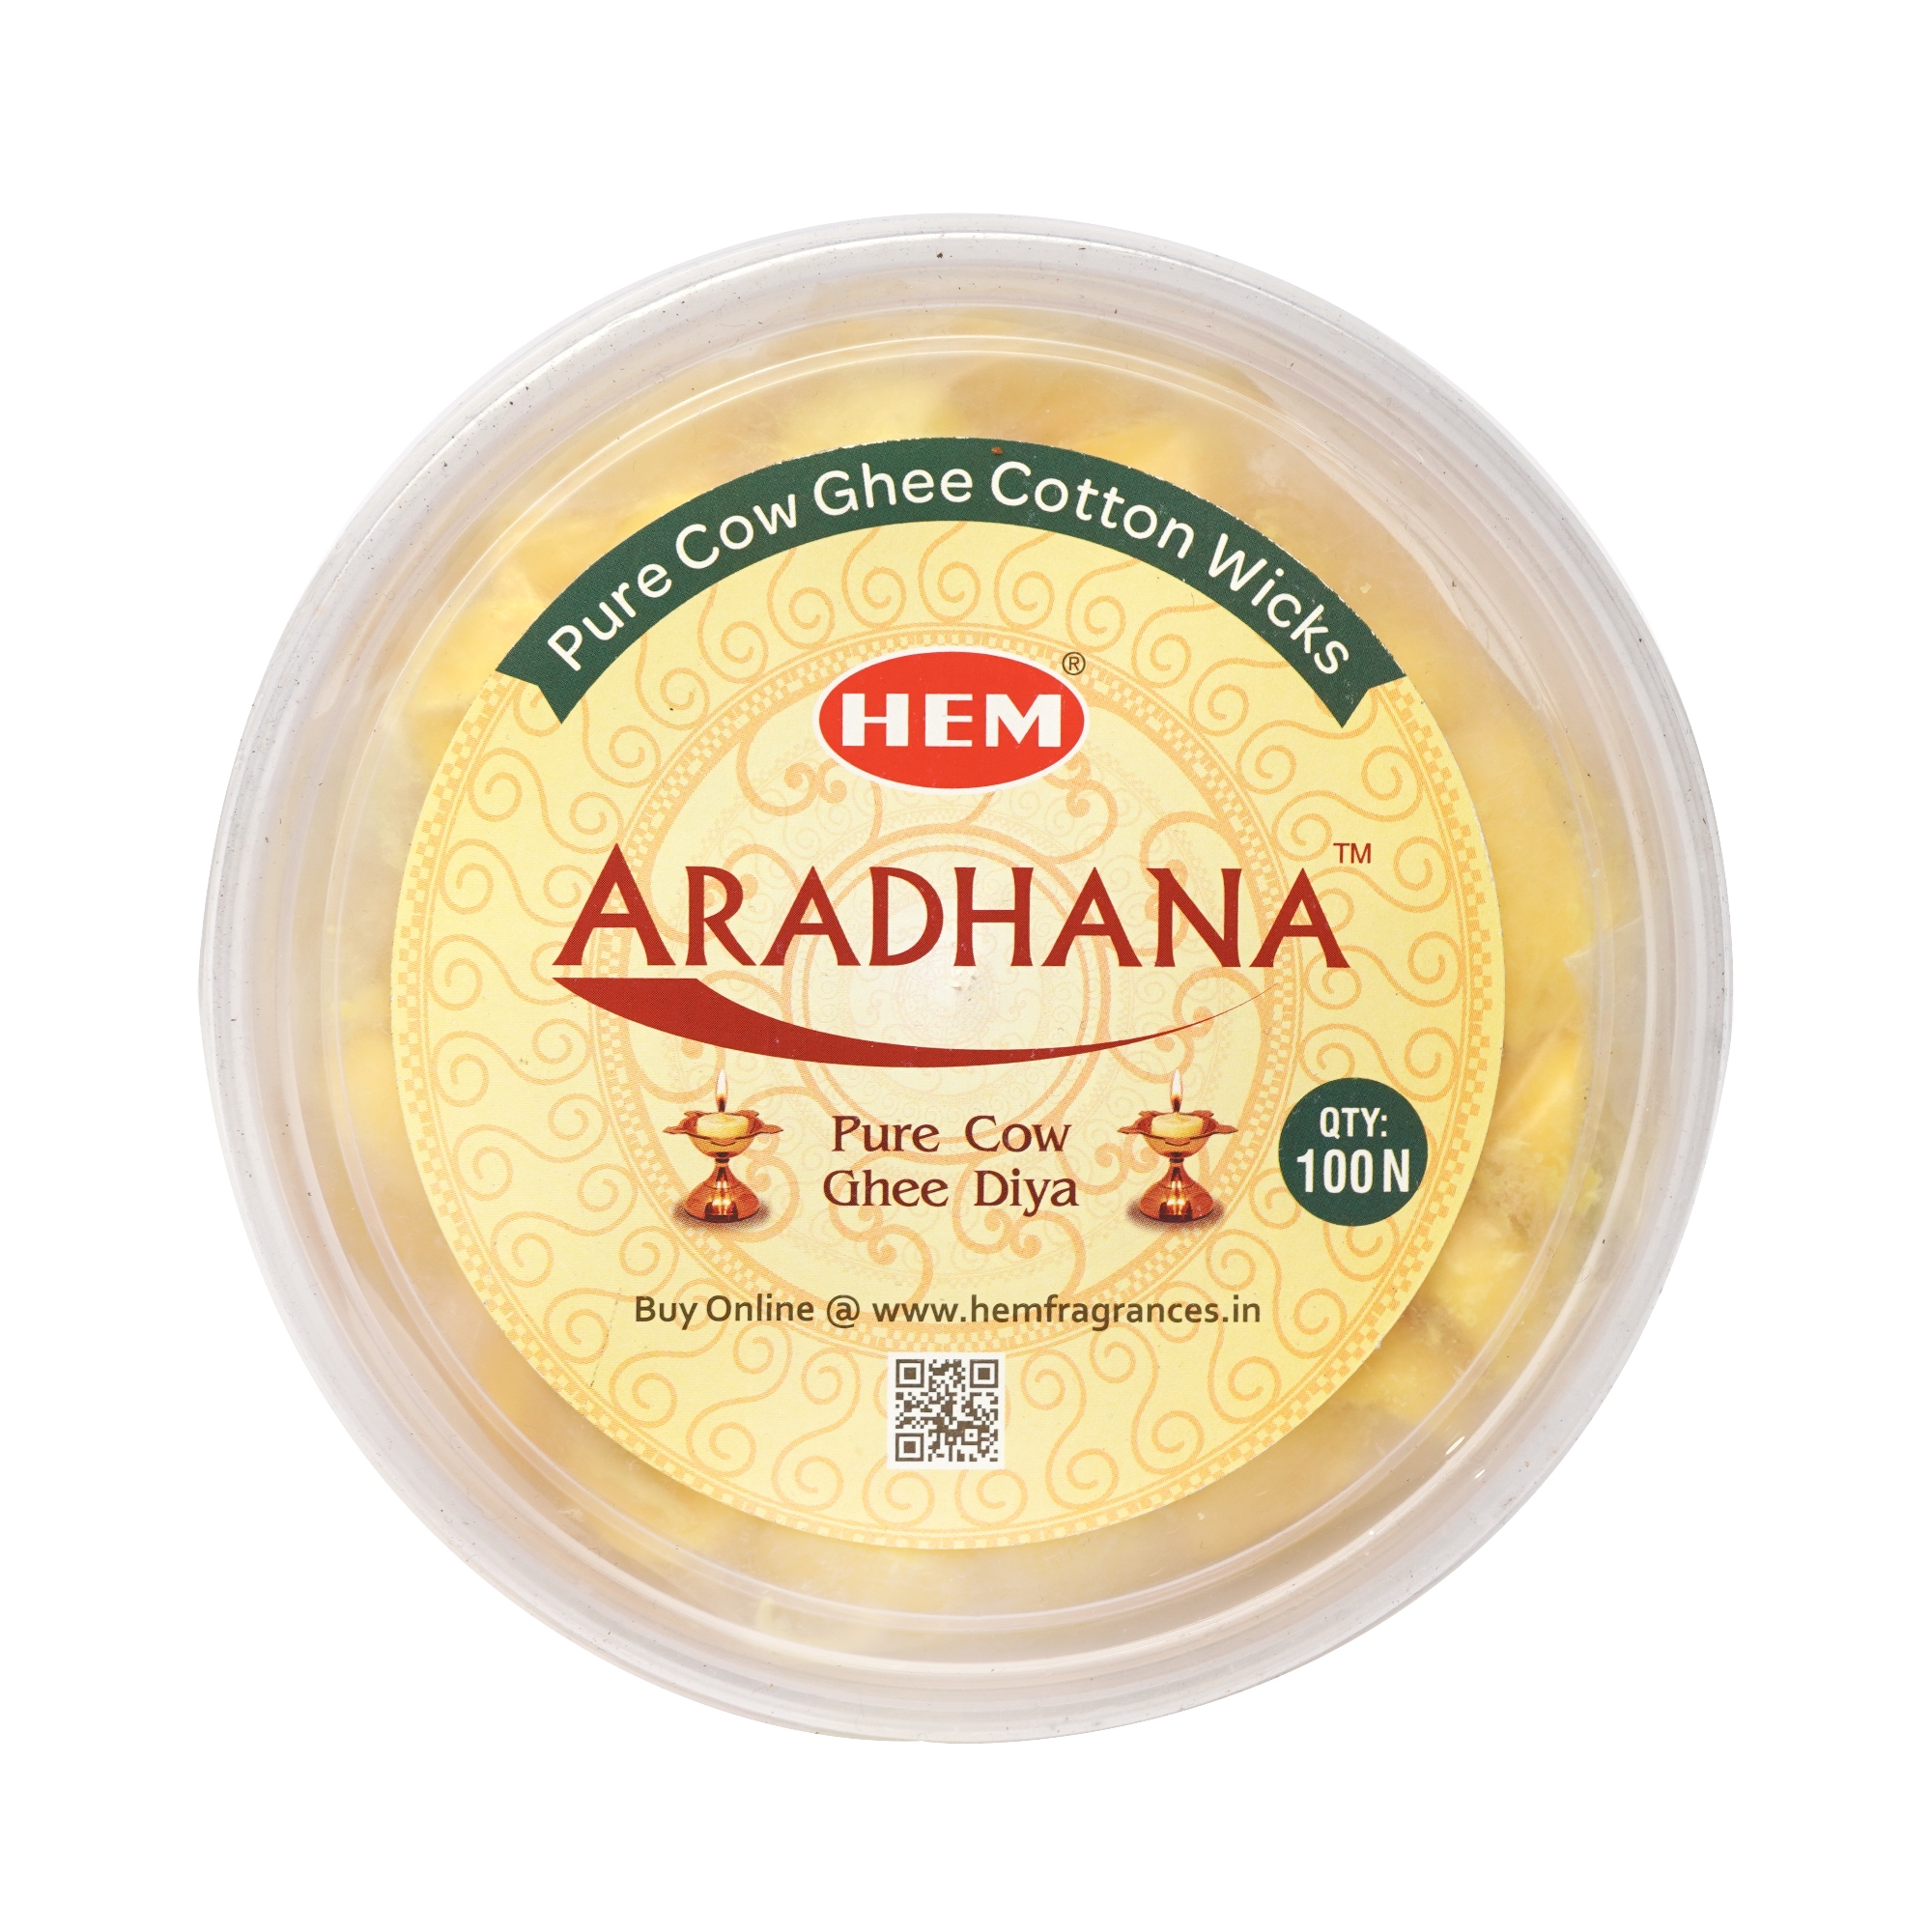 HEM Agarbatti launches Aradhana Cow Pure Ghee Diya